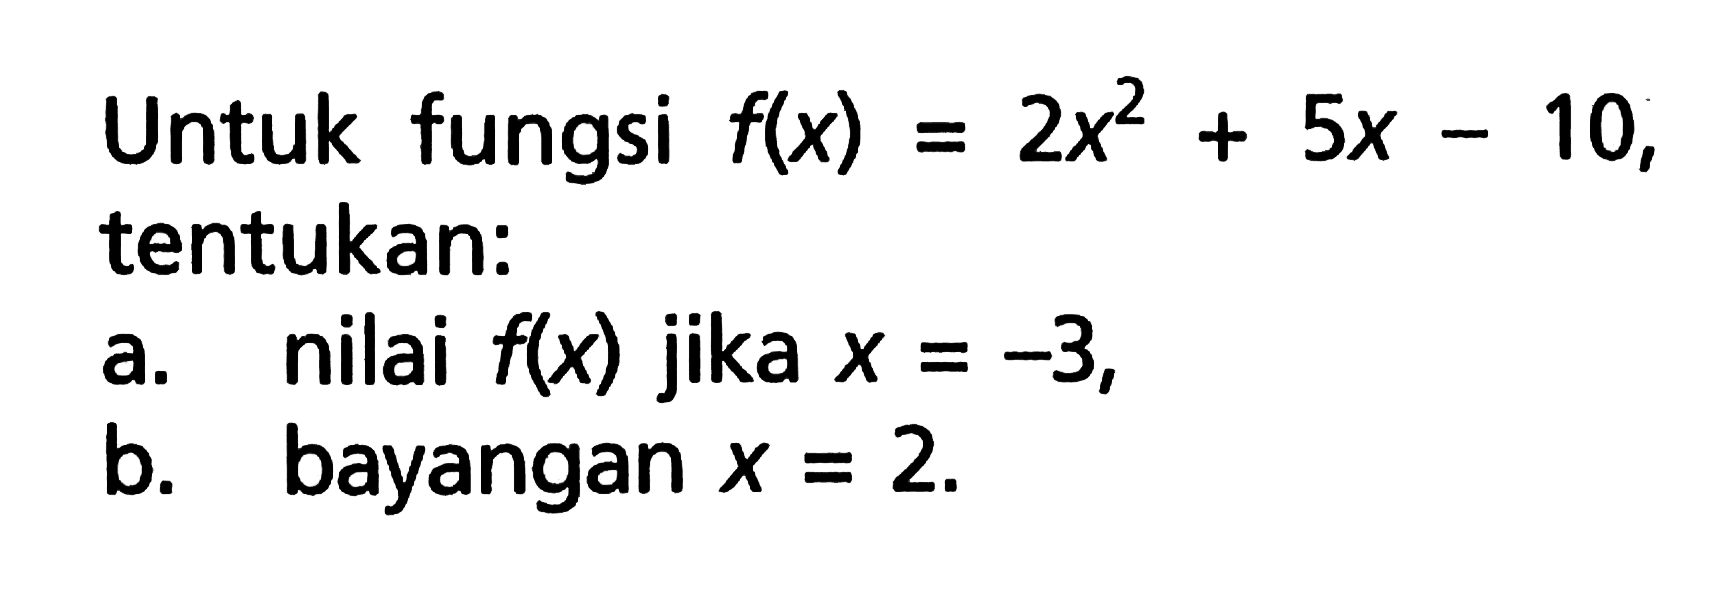 Untuk fungsi f(x) = 2x^2 + 5x - 10, tentukan: a. nilai f(x) jika x = -3, b. bayangan x = 2.